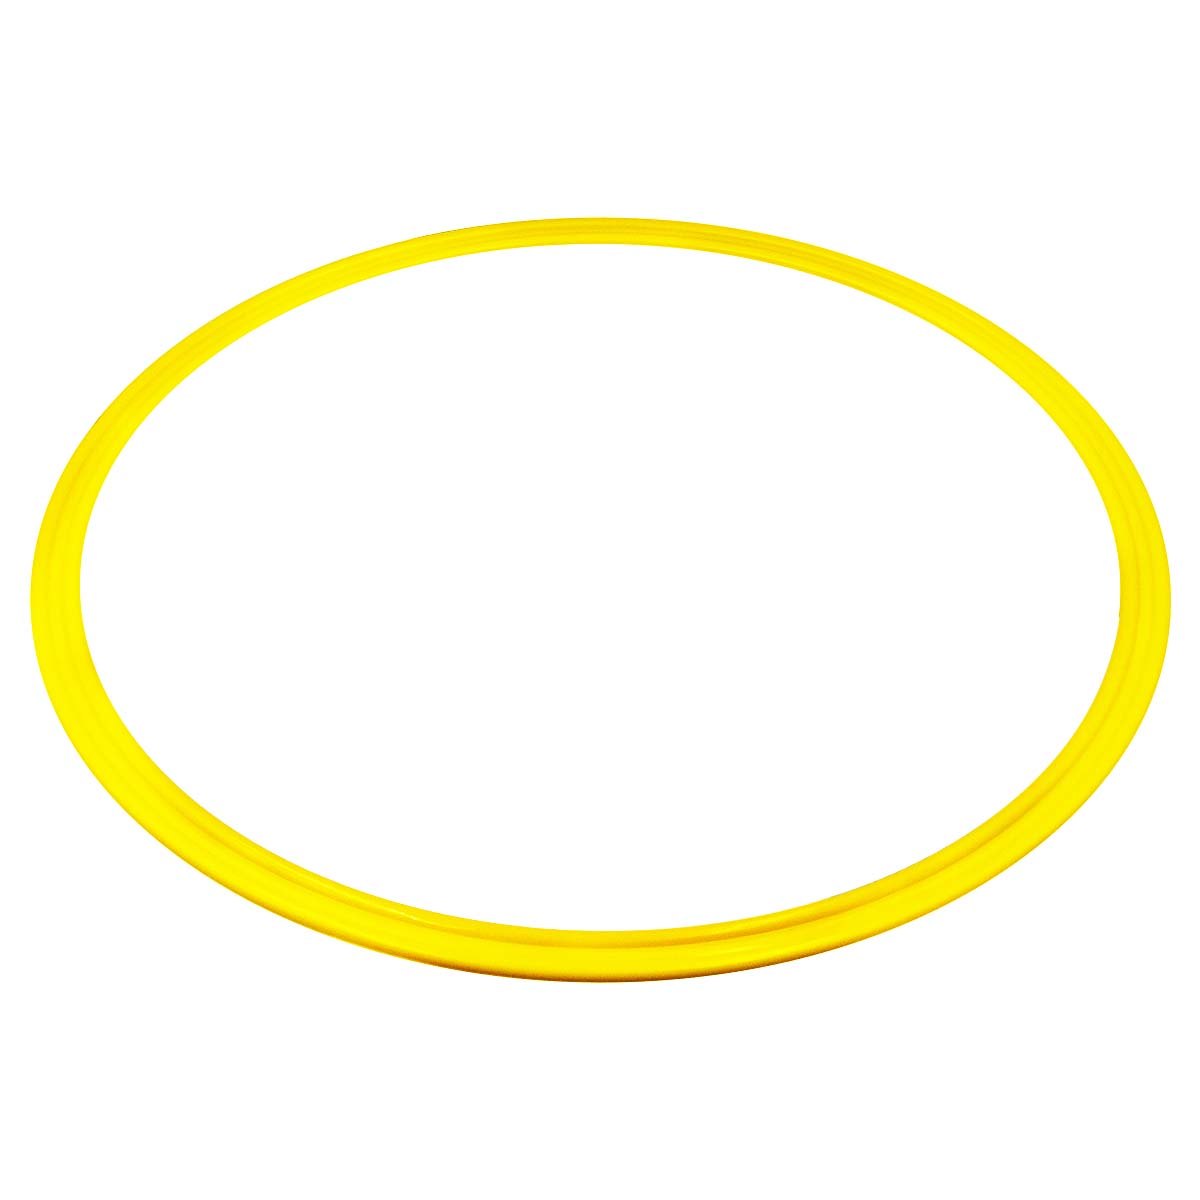 Arco De Agilidade De Plástico Plano Em Pvc Ø 40cm | Amarelo - amarillo - 